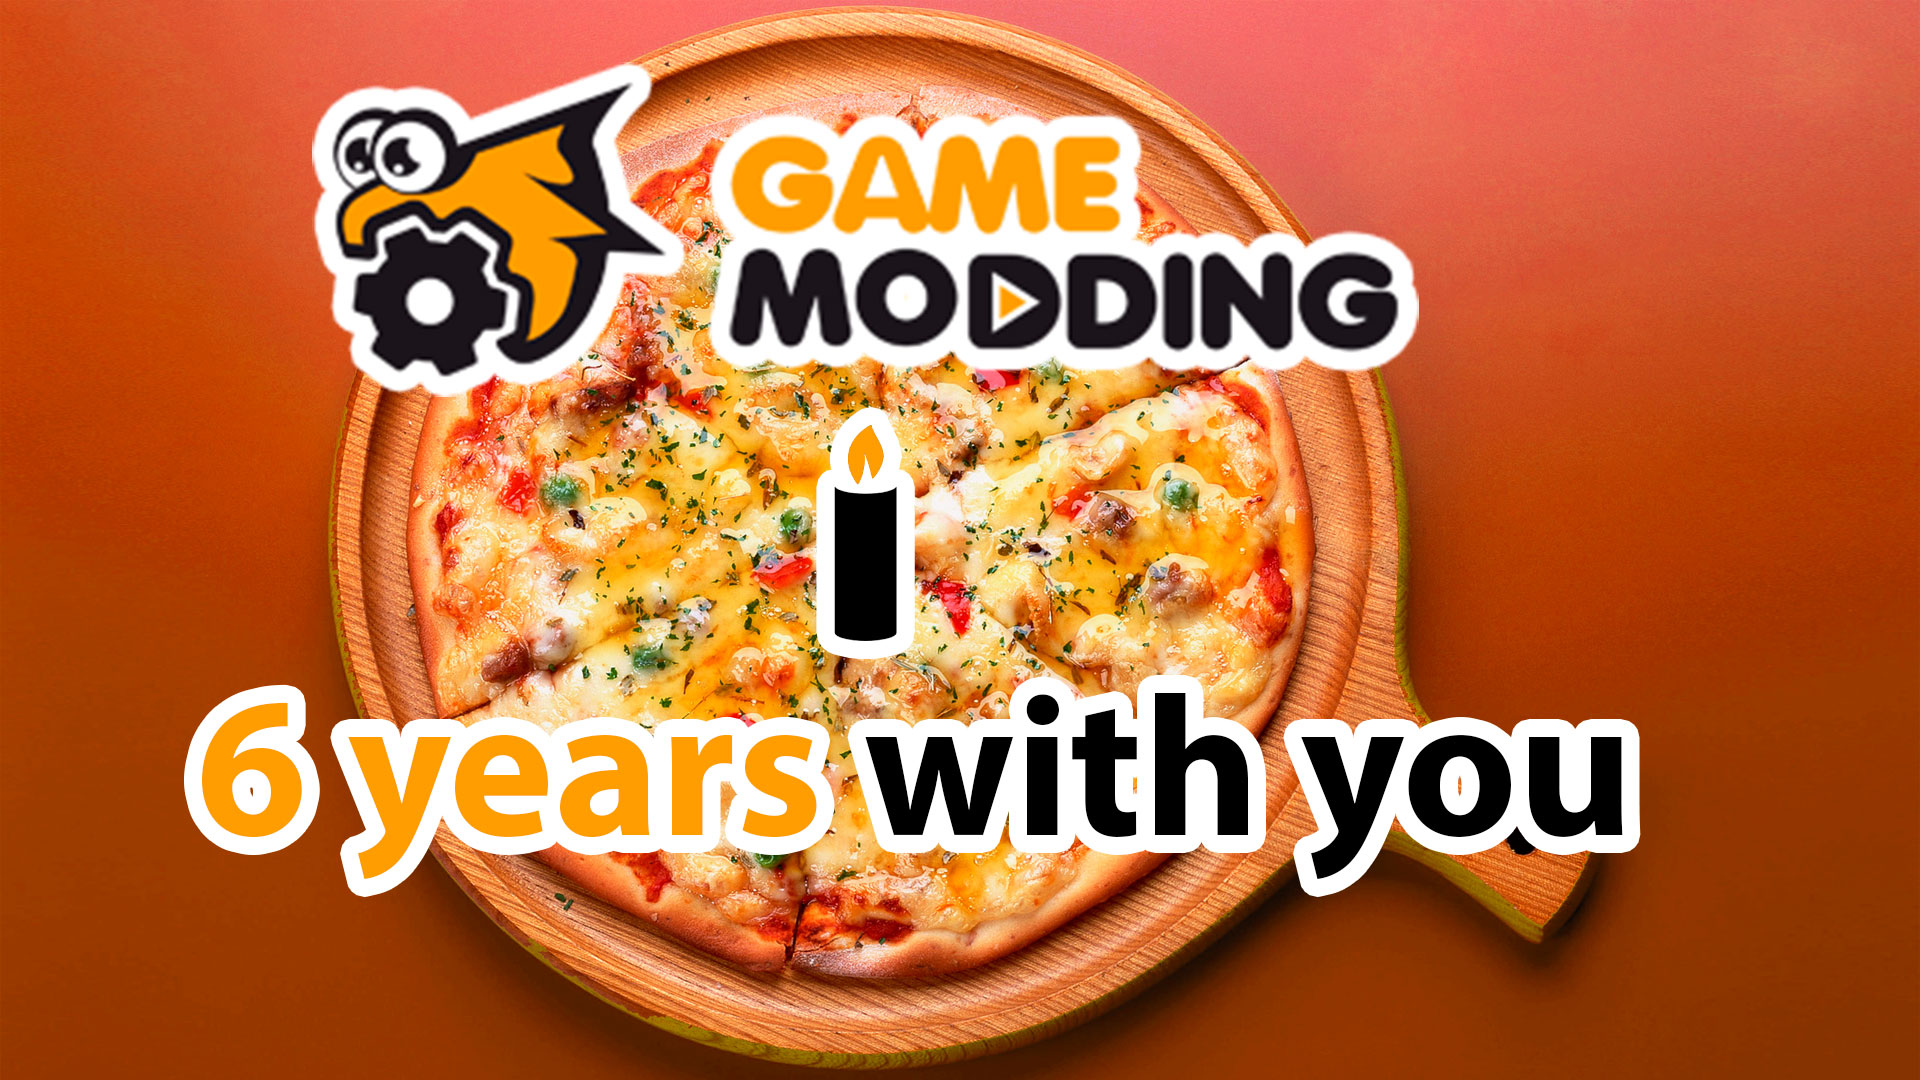 Game Modding celebrates 6 years!